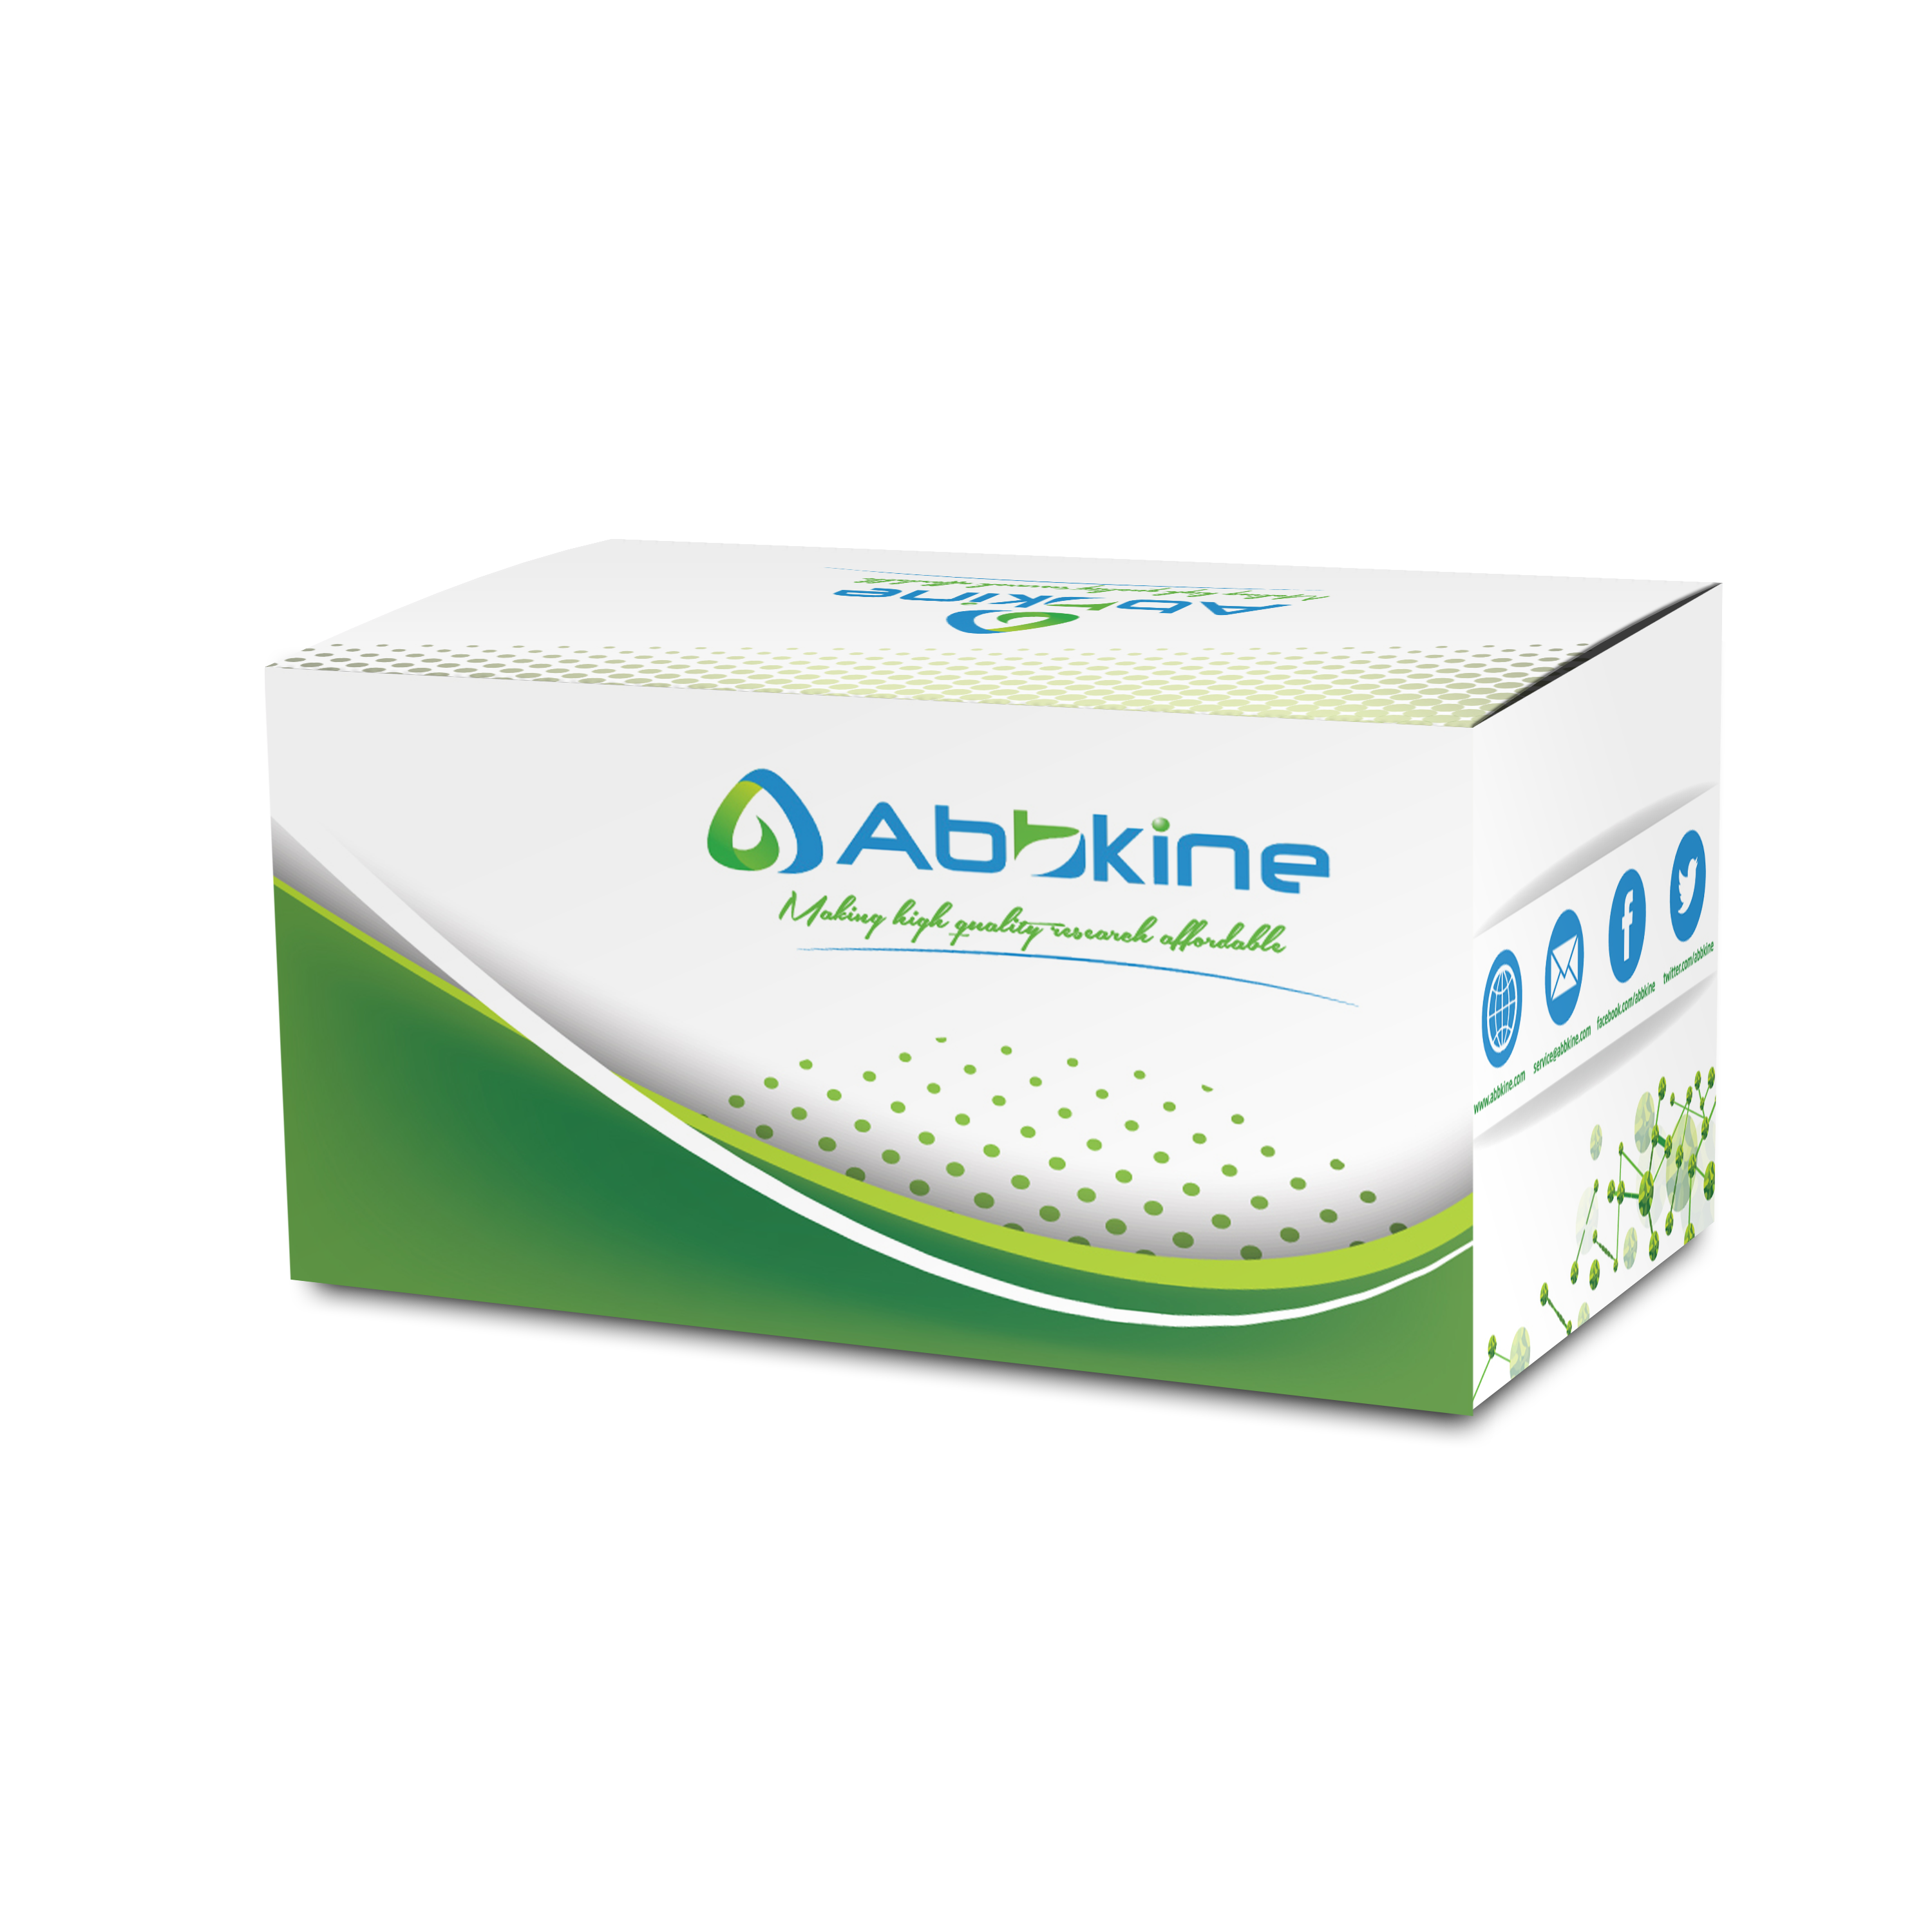 abbkine-kit.png&&Fig. CheKine Glutathione Peroxidase (GSH-Px) Colorimetric Assay Kit